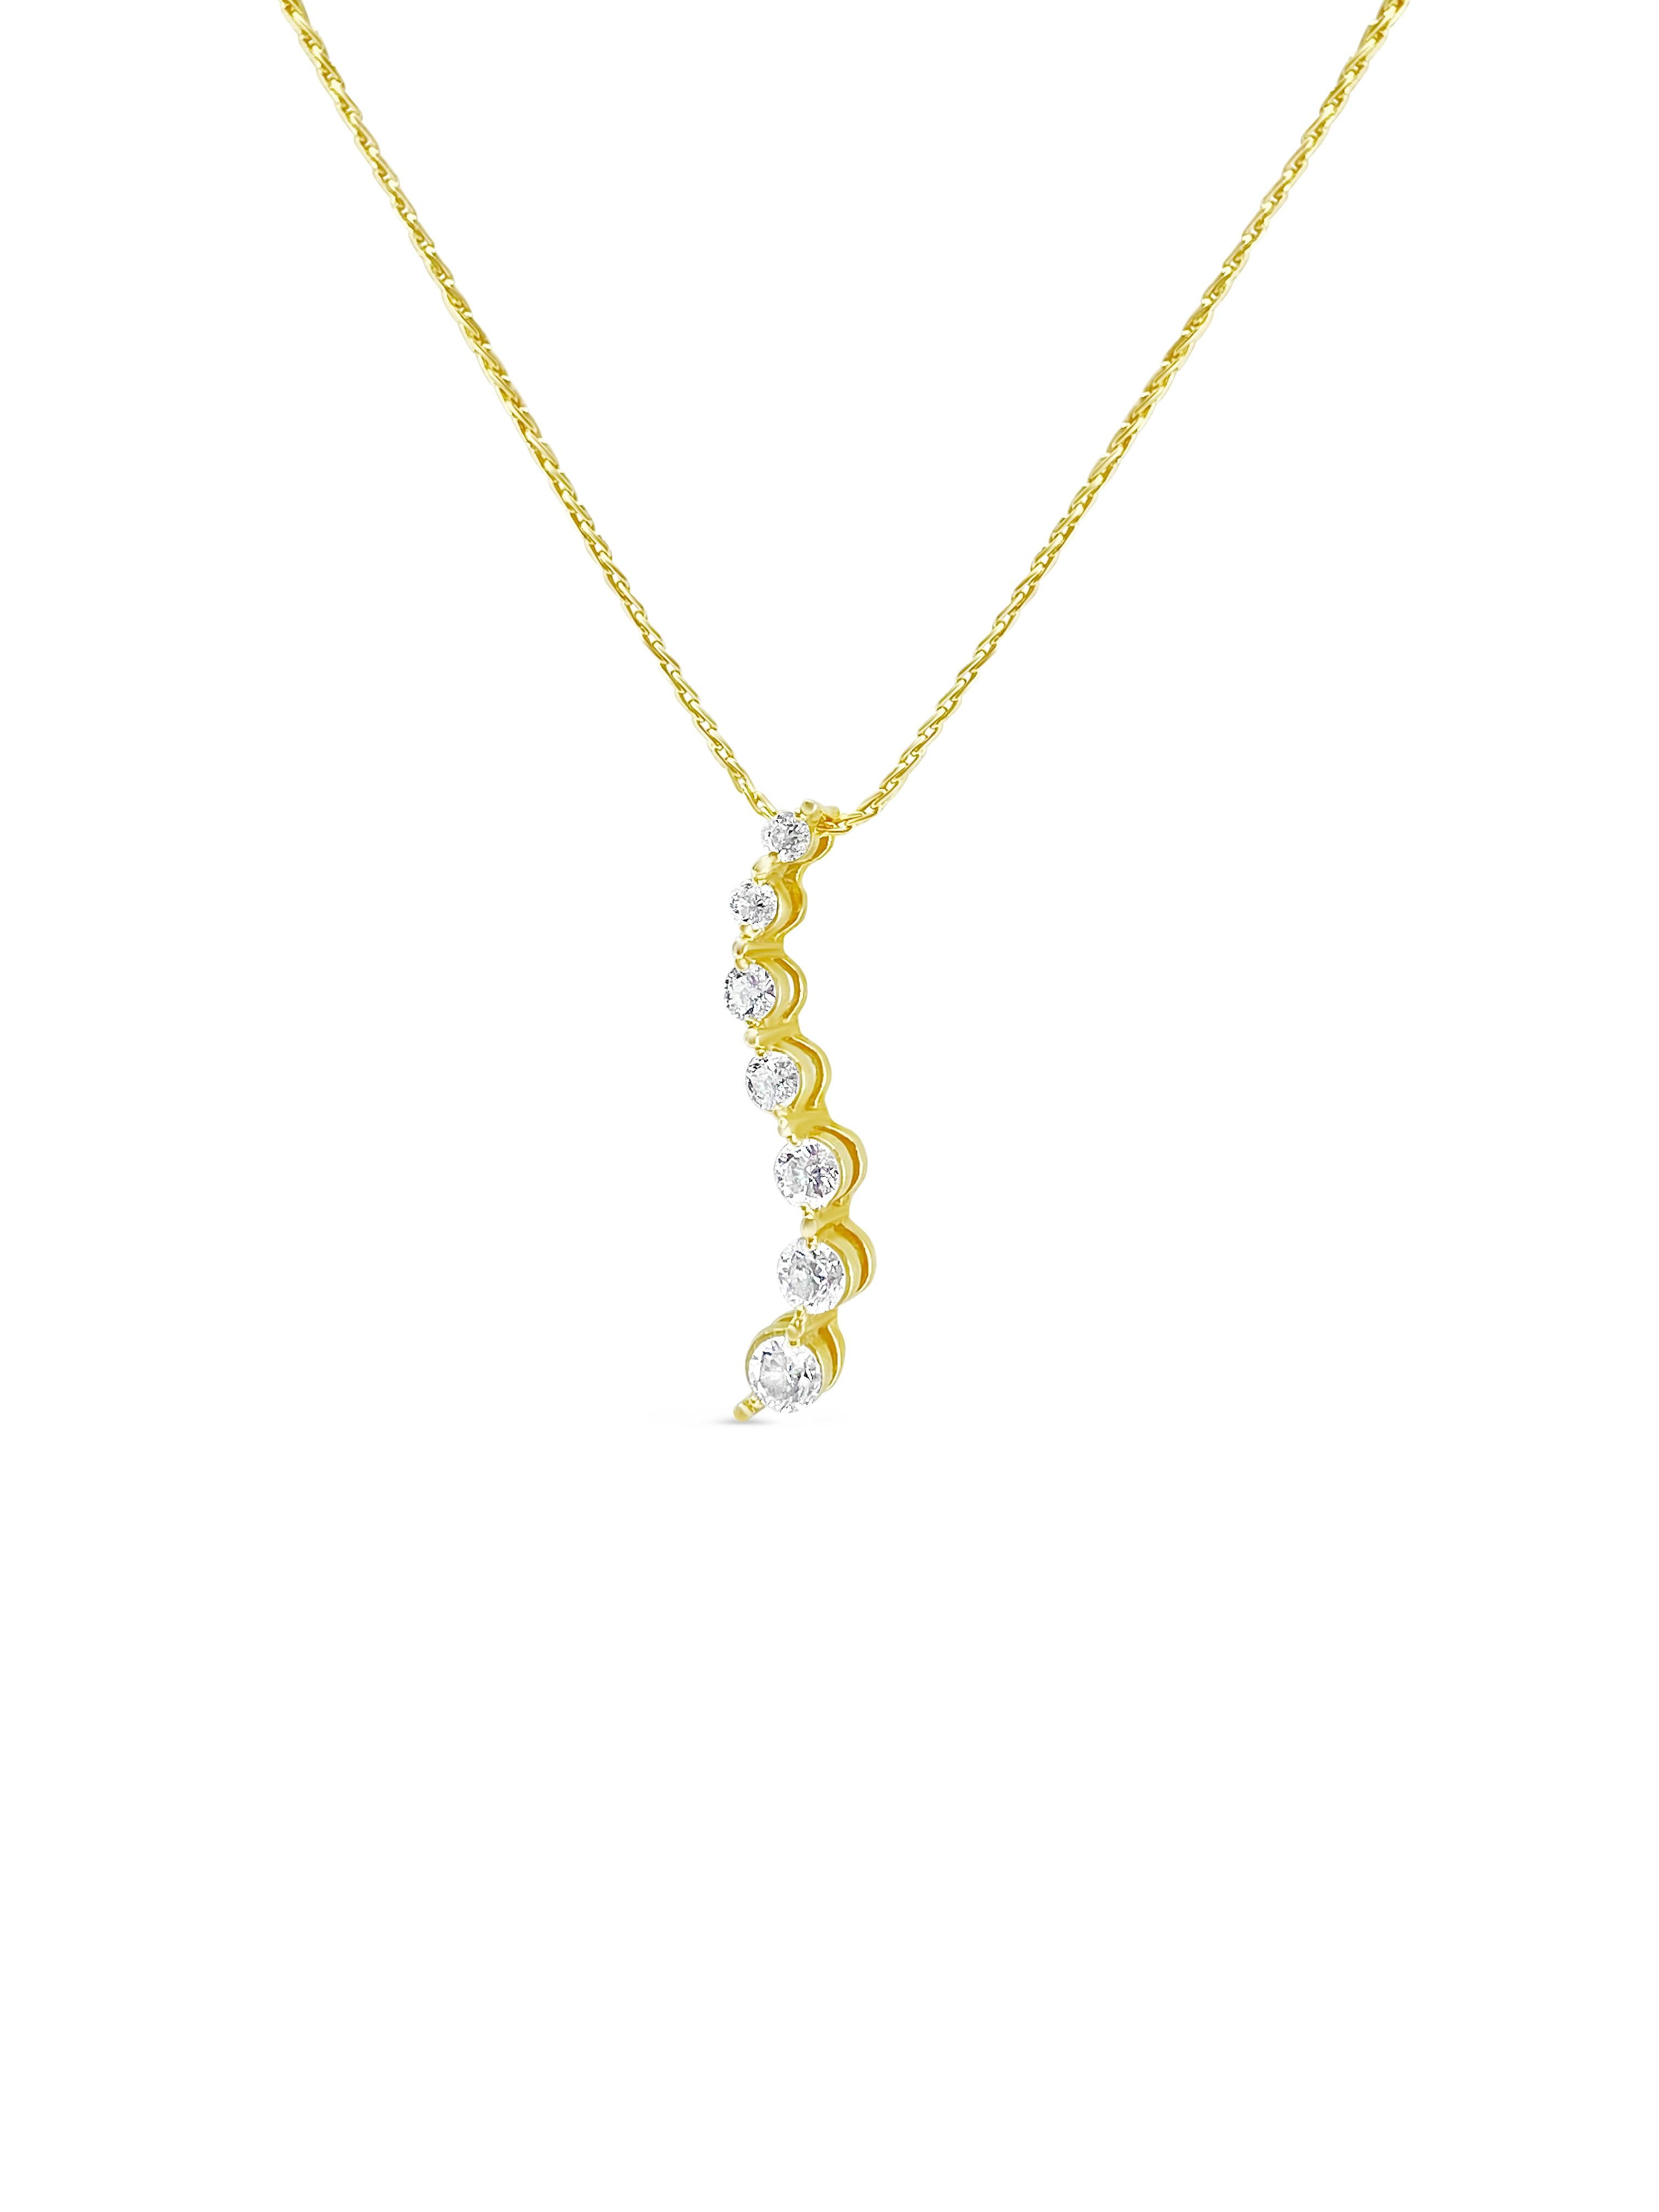 Medieval Vintage 0.80 Carat Diamond Pendant Necklace For Her For Sale